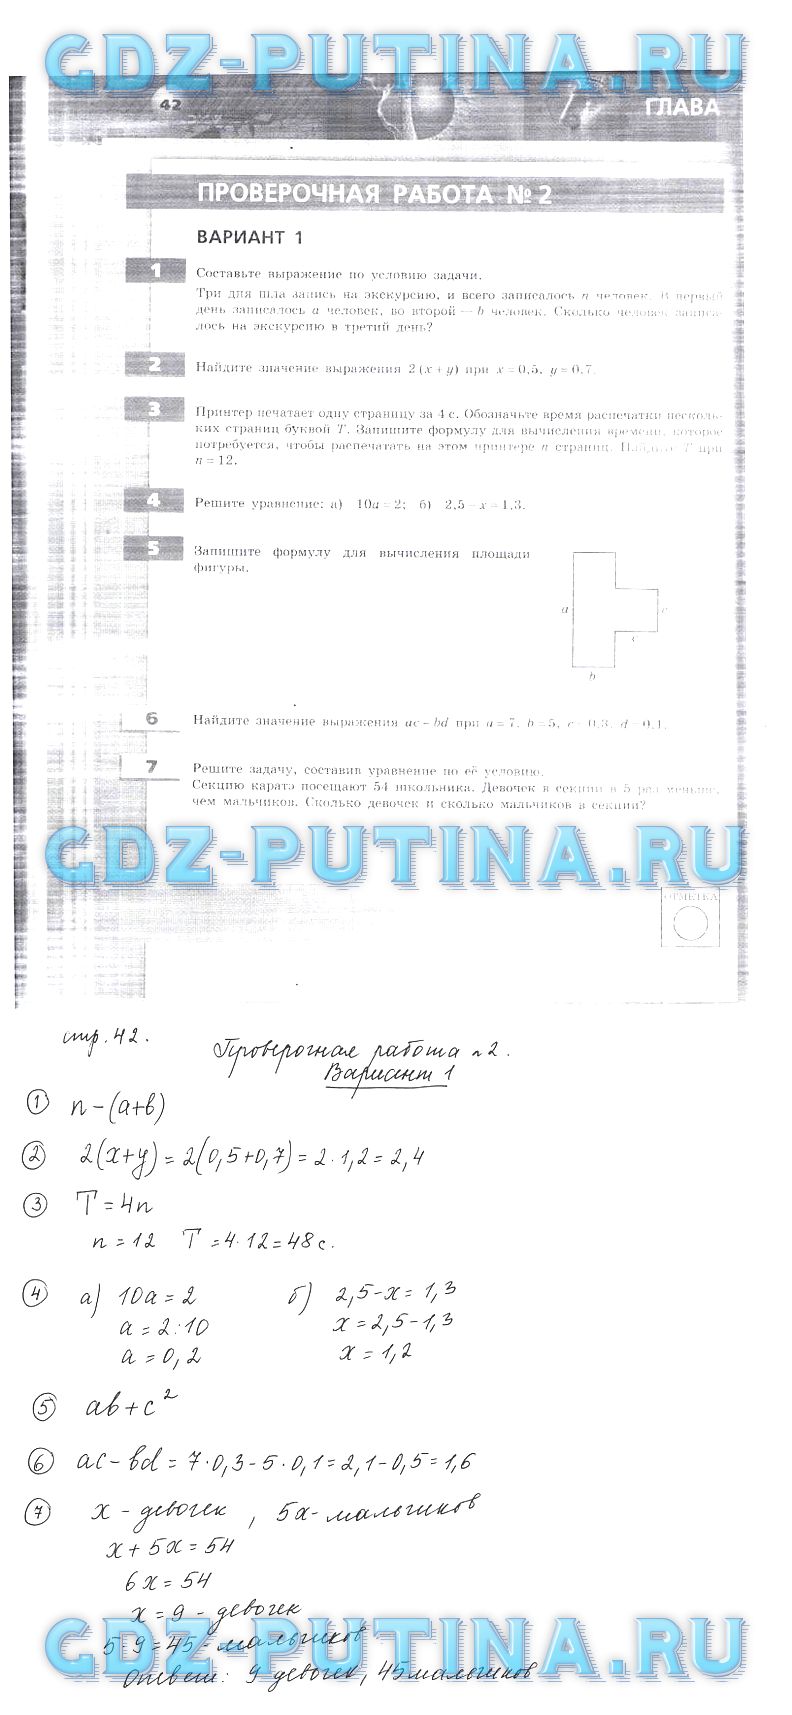 гдз 6 класс тетрадь-экзаменатор страница 42 математика Кузнецова